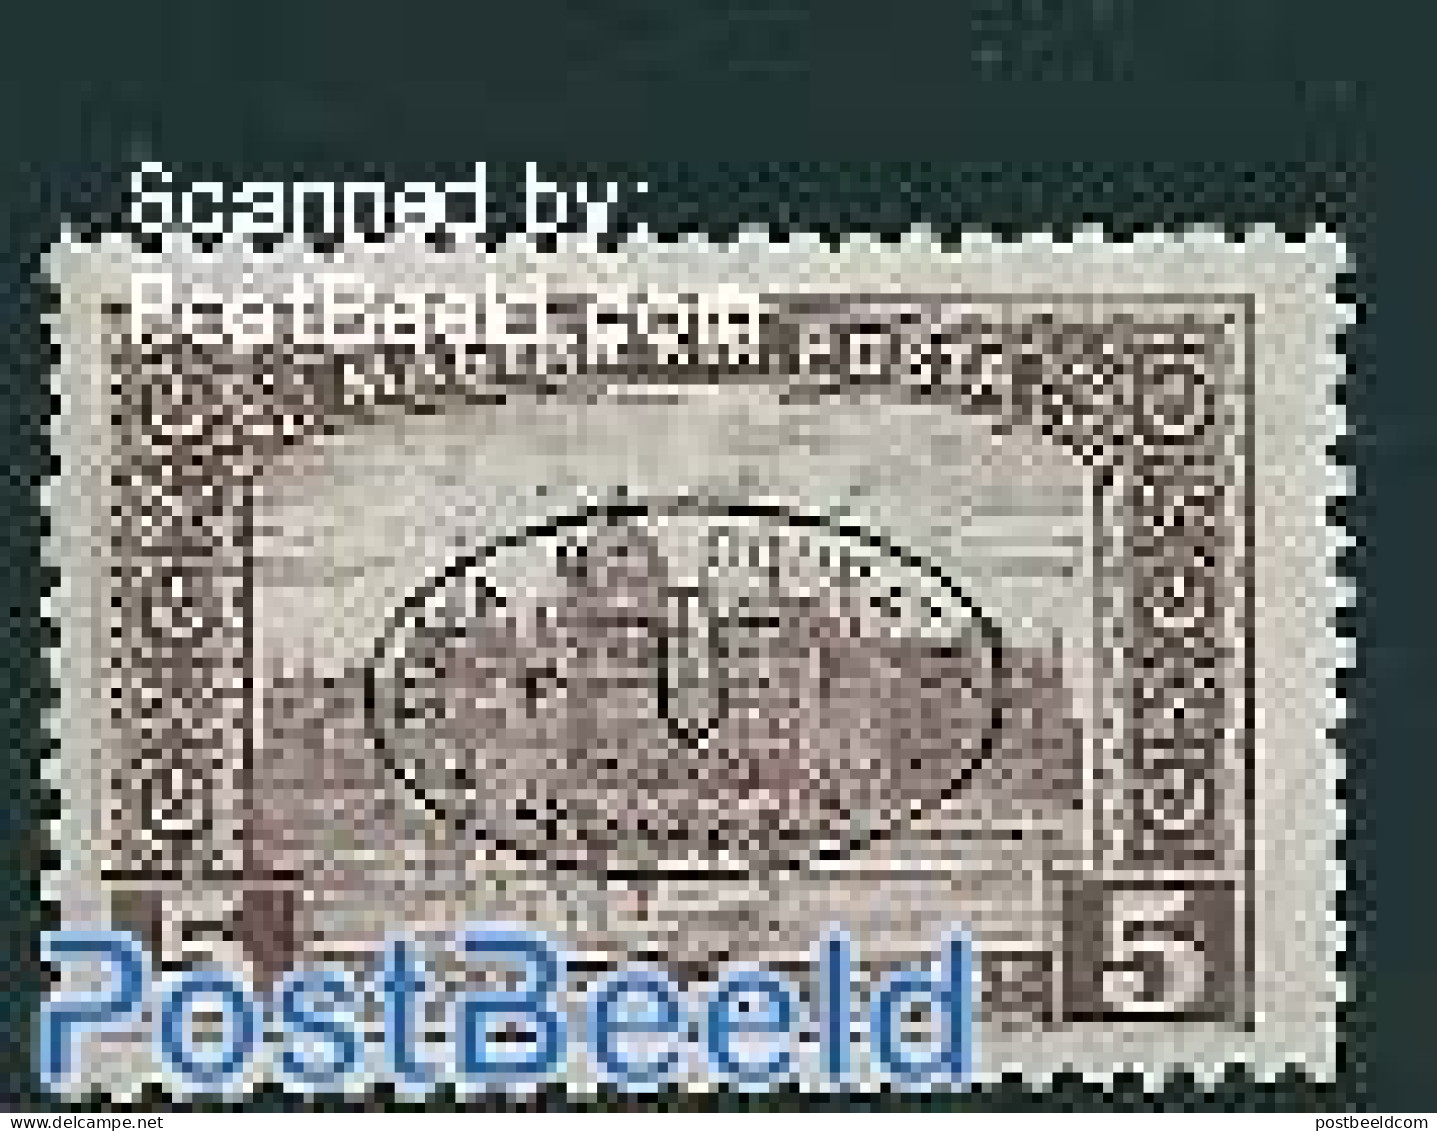 Hungary 1919 Debrecen, 5Kr, Stamp Out Of Set, Unused (hinged) - Nuevos